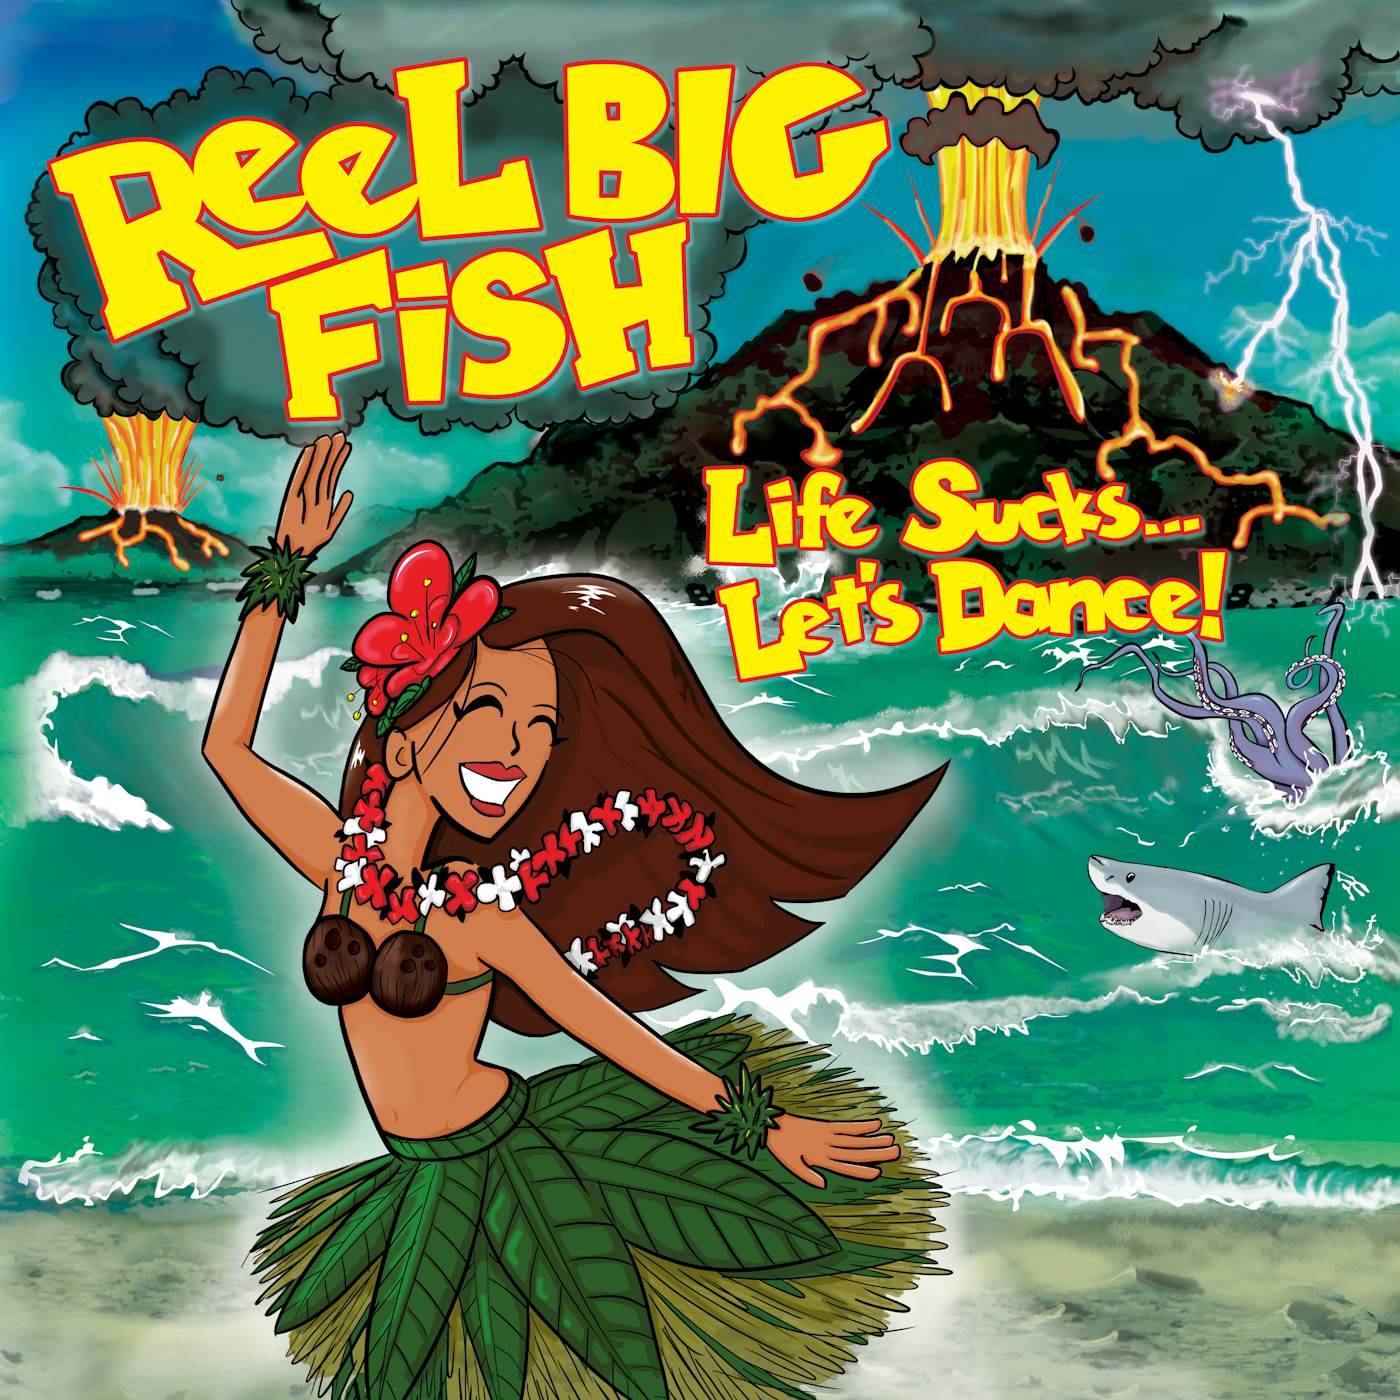 Reel Big Fish LIFE SUCKS LET'S DANCE Vinyl Record